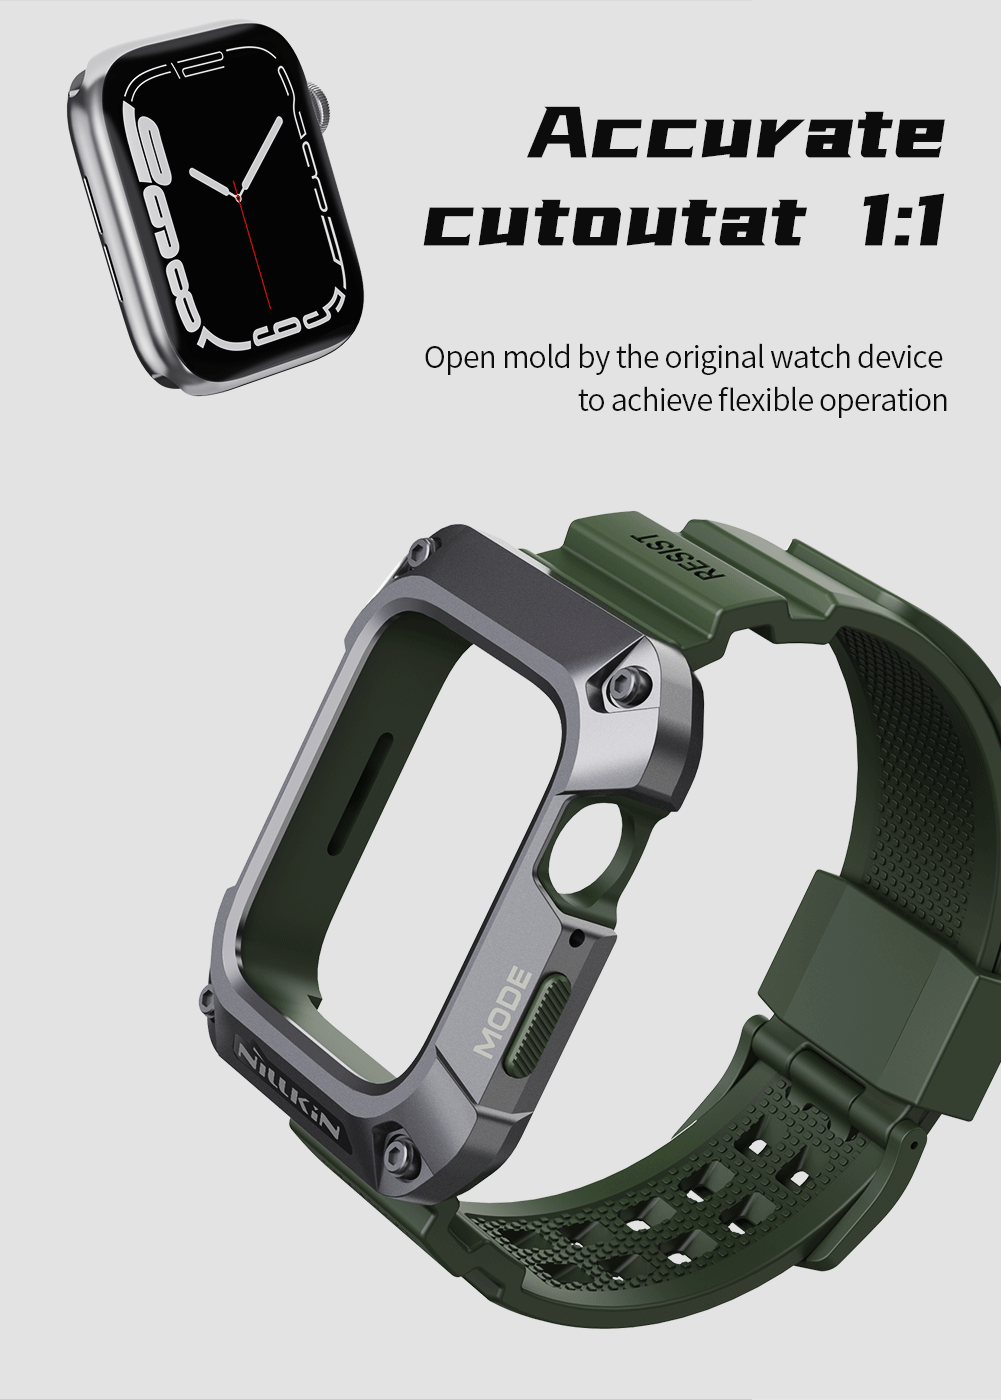 Nillkin 44mm Alloy+TPU 2 in 1 Watchband Case for Apple Watch 4/5/6/SE Dynaguard Series